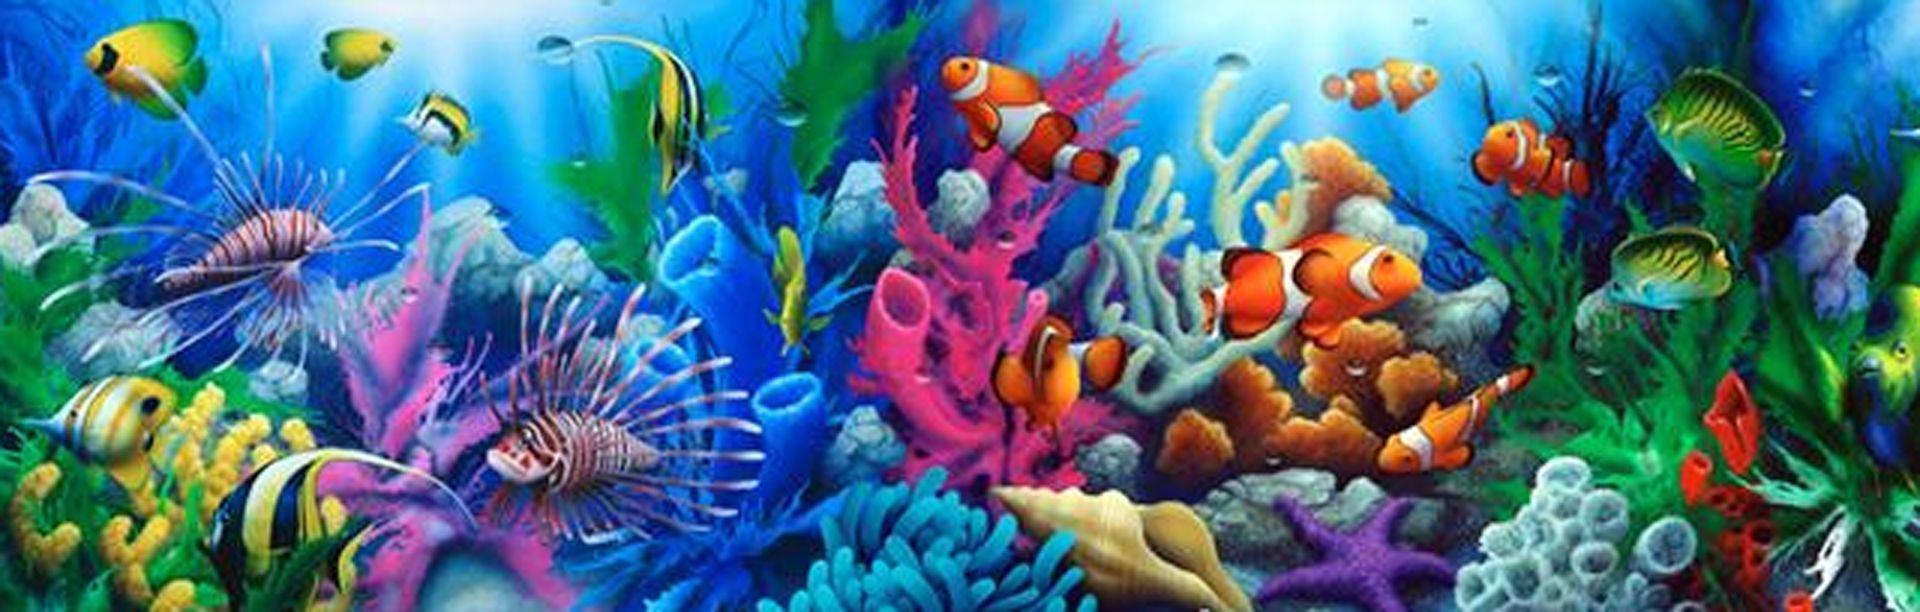 tropical coral reef mural